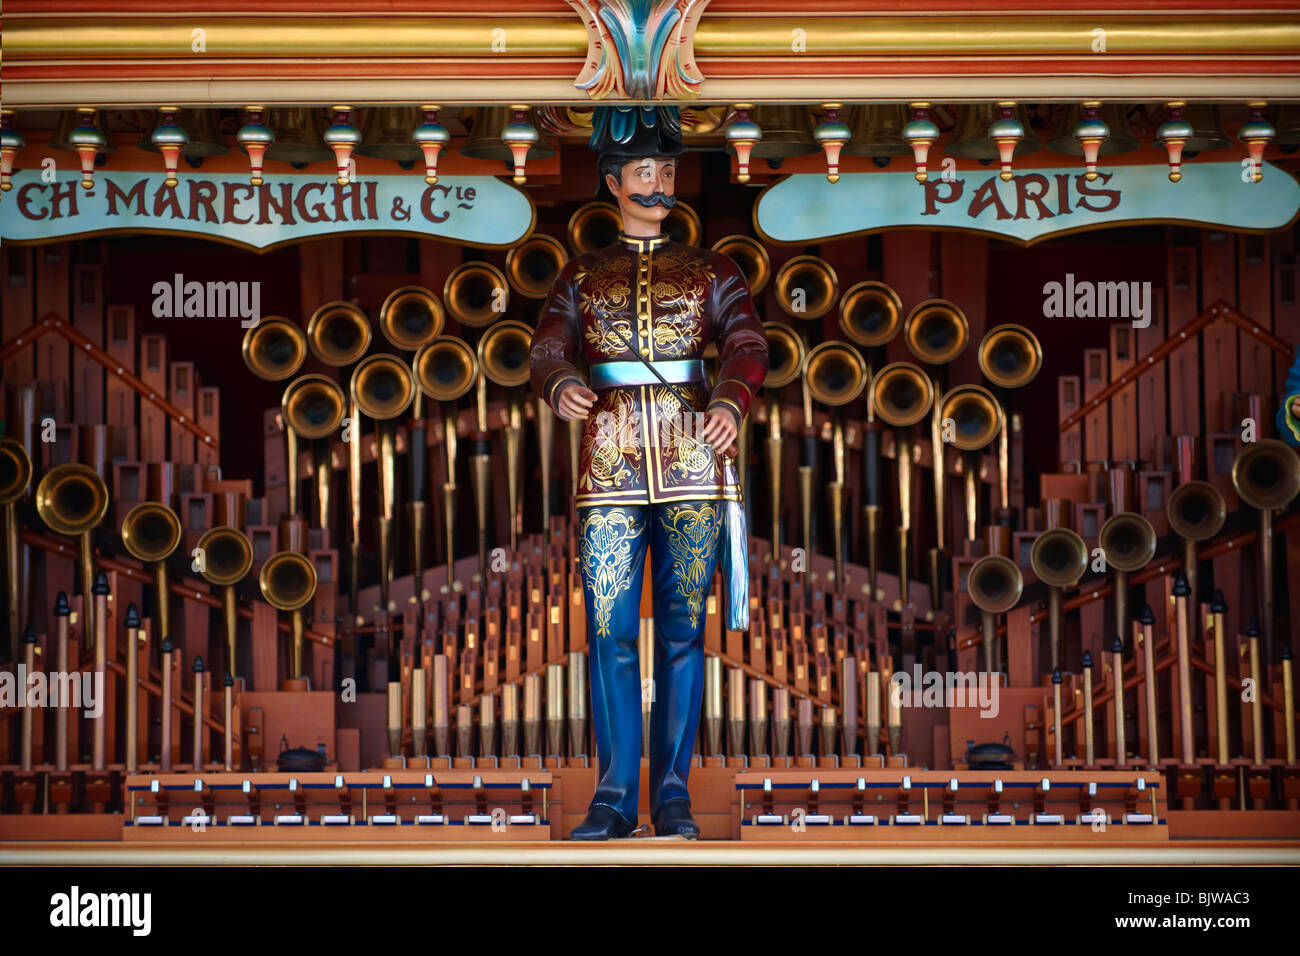 Charles Marenghi & Cie fairground organs Stock Photo